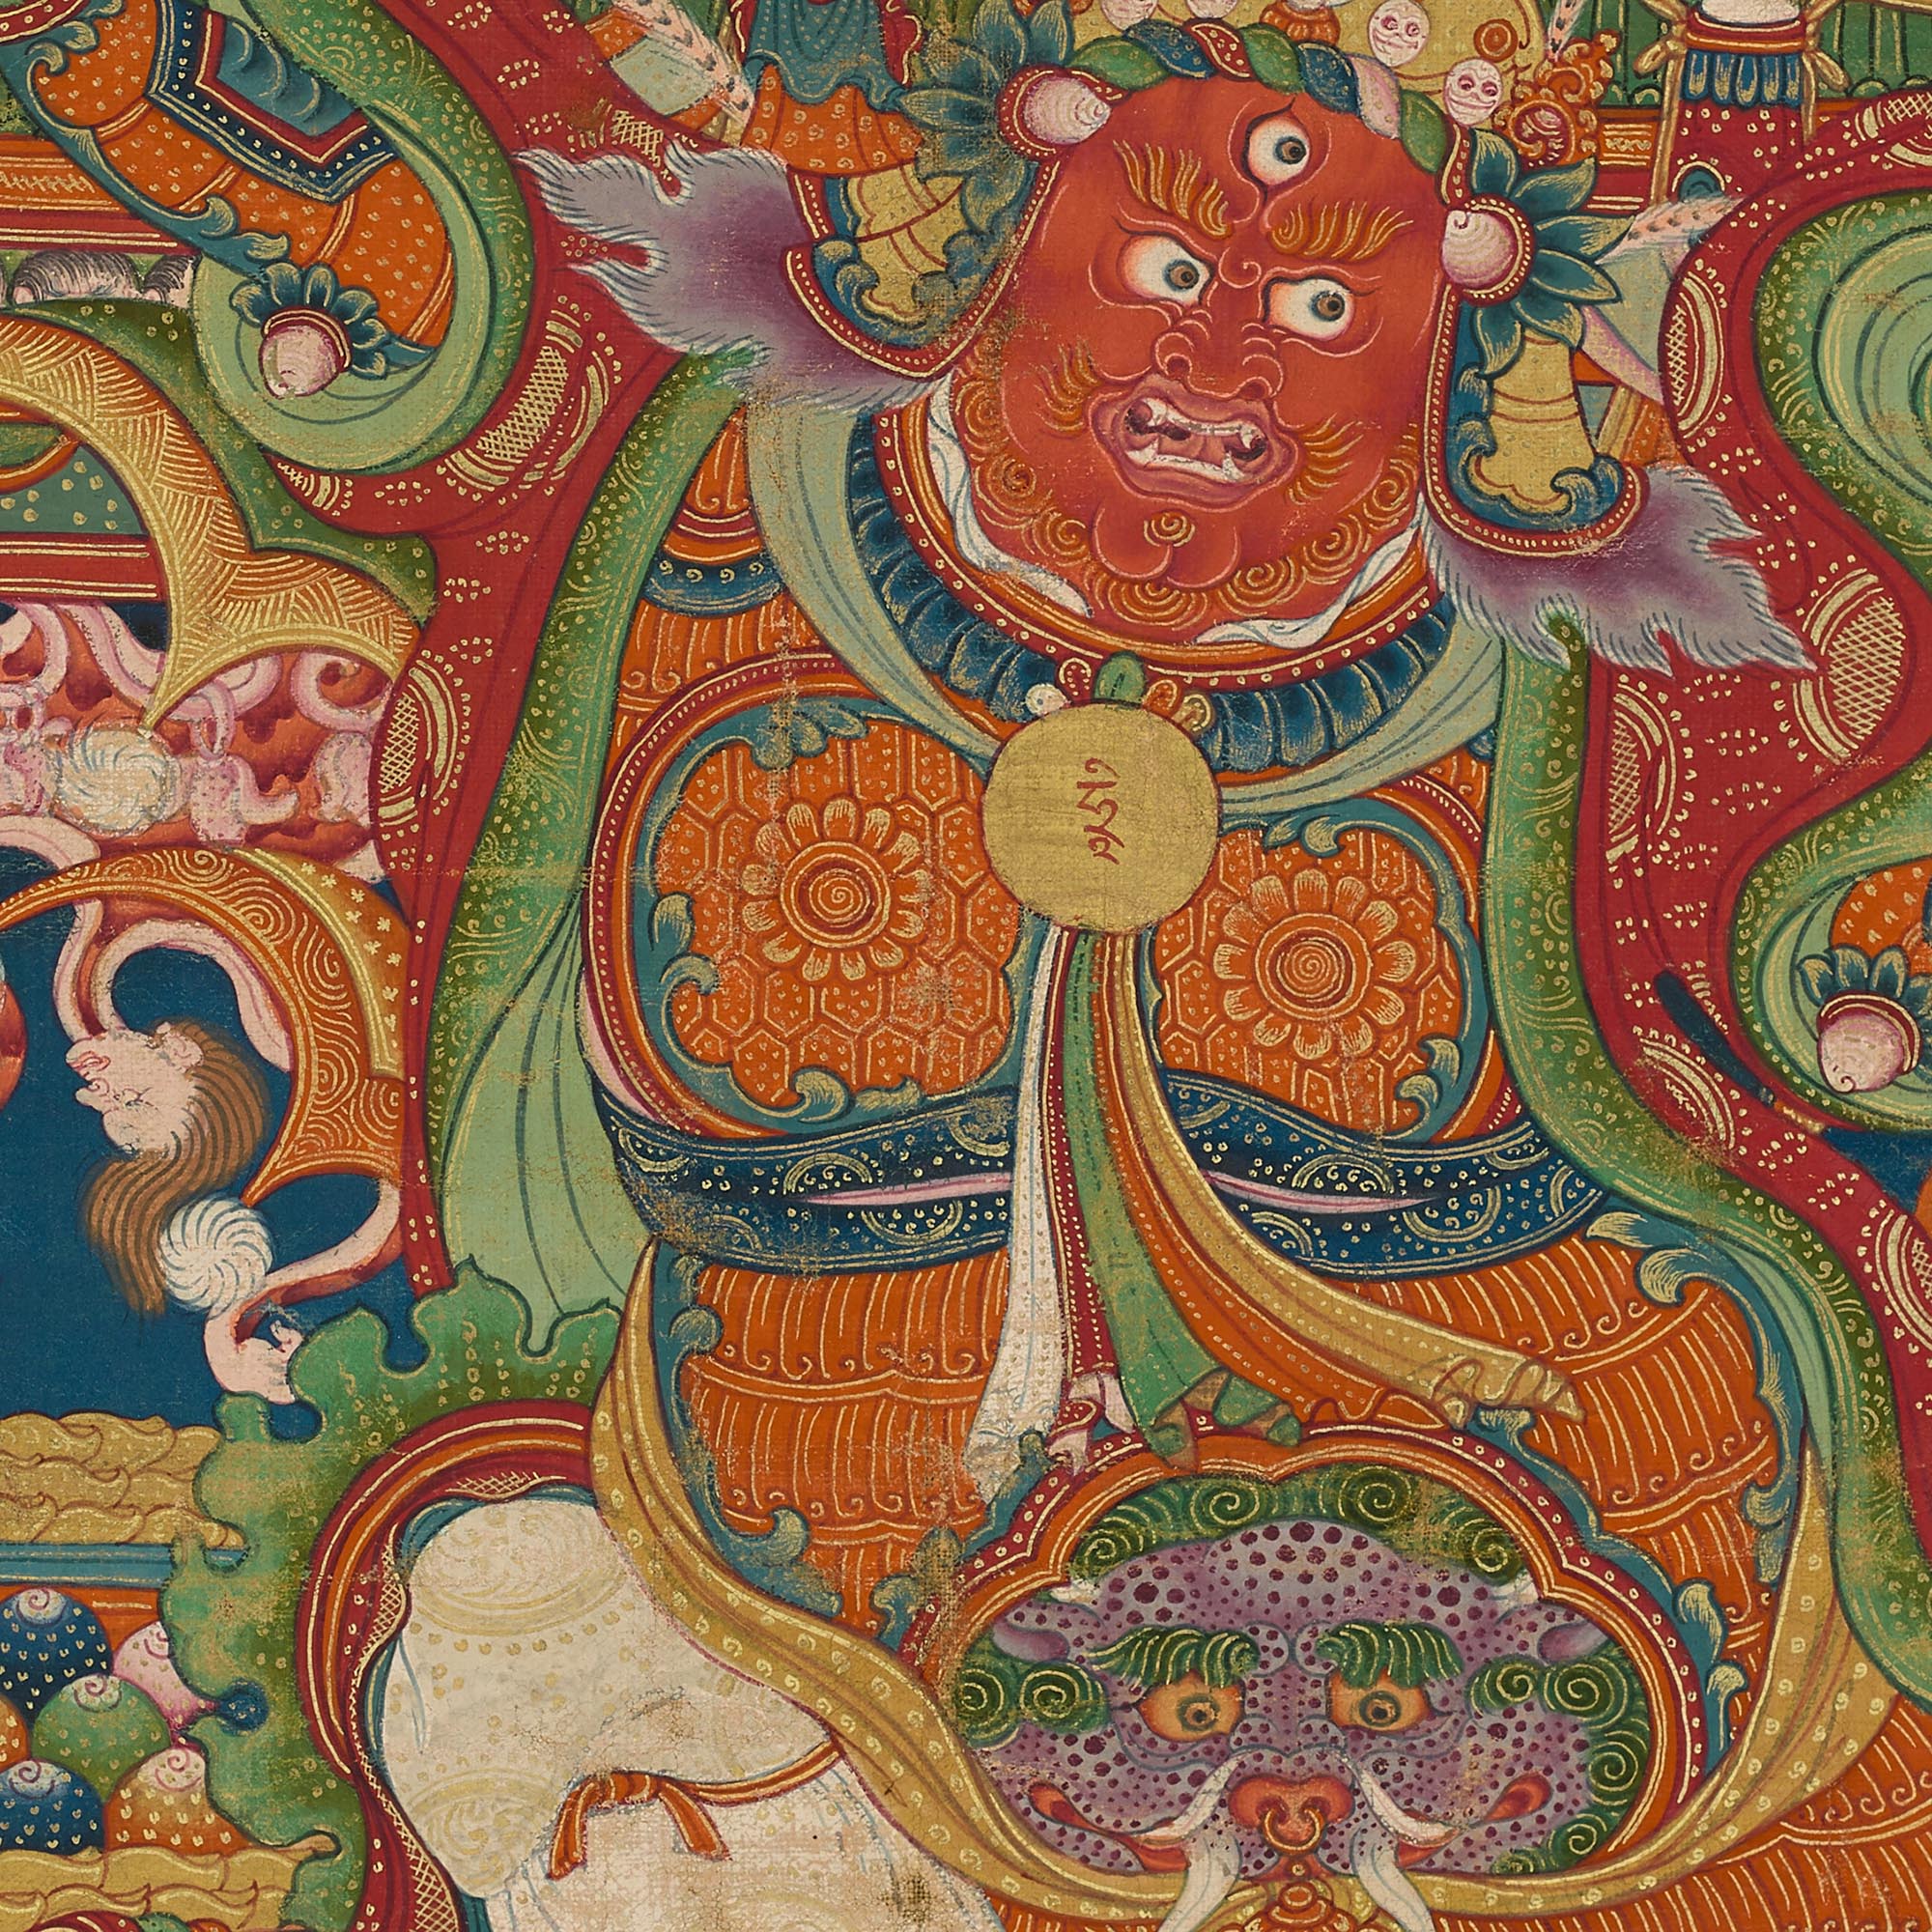 giclee The Buddhist Protector Nechung Chogyong Antique Tibetan Thangka Vintage Decor Fine Art Print